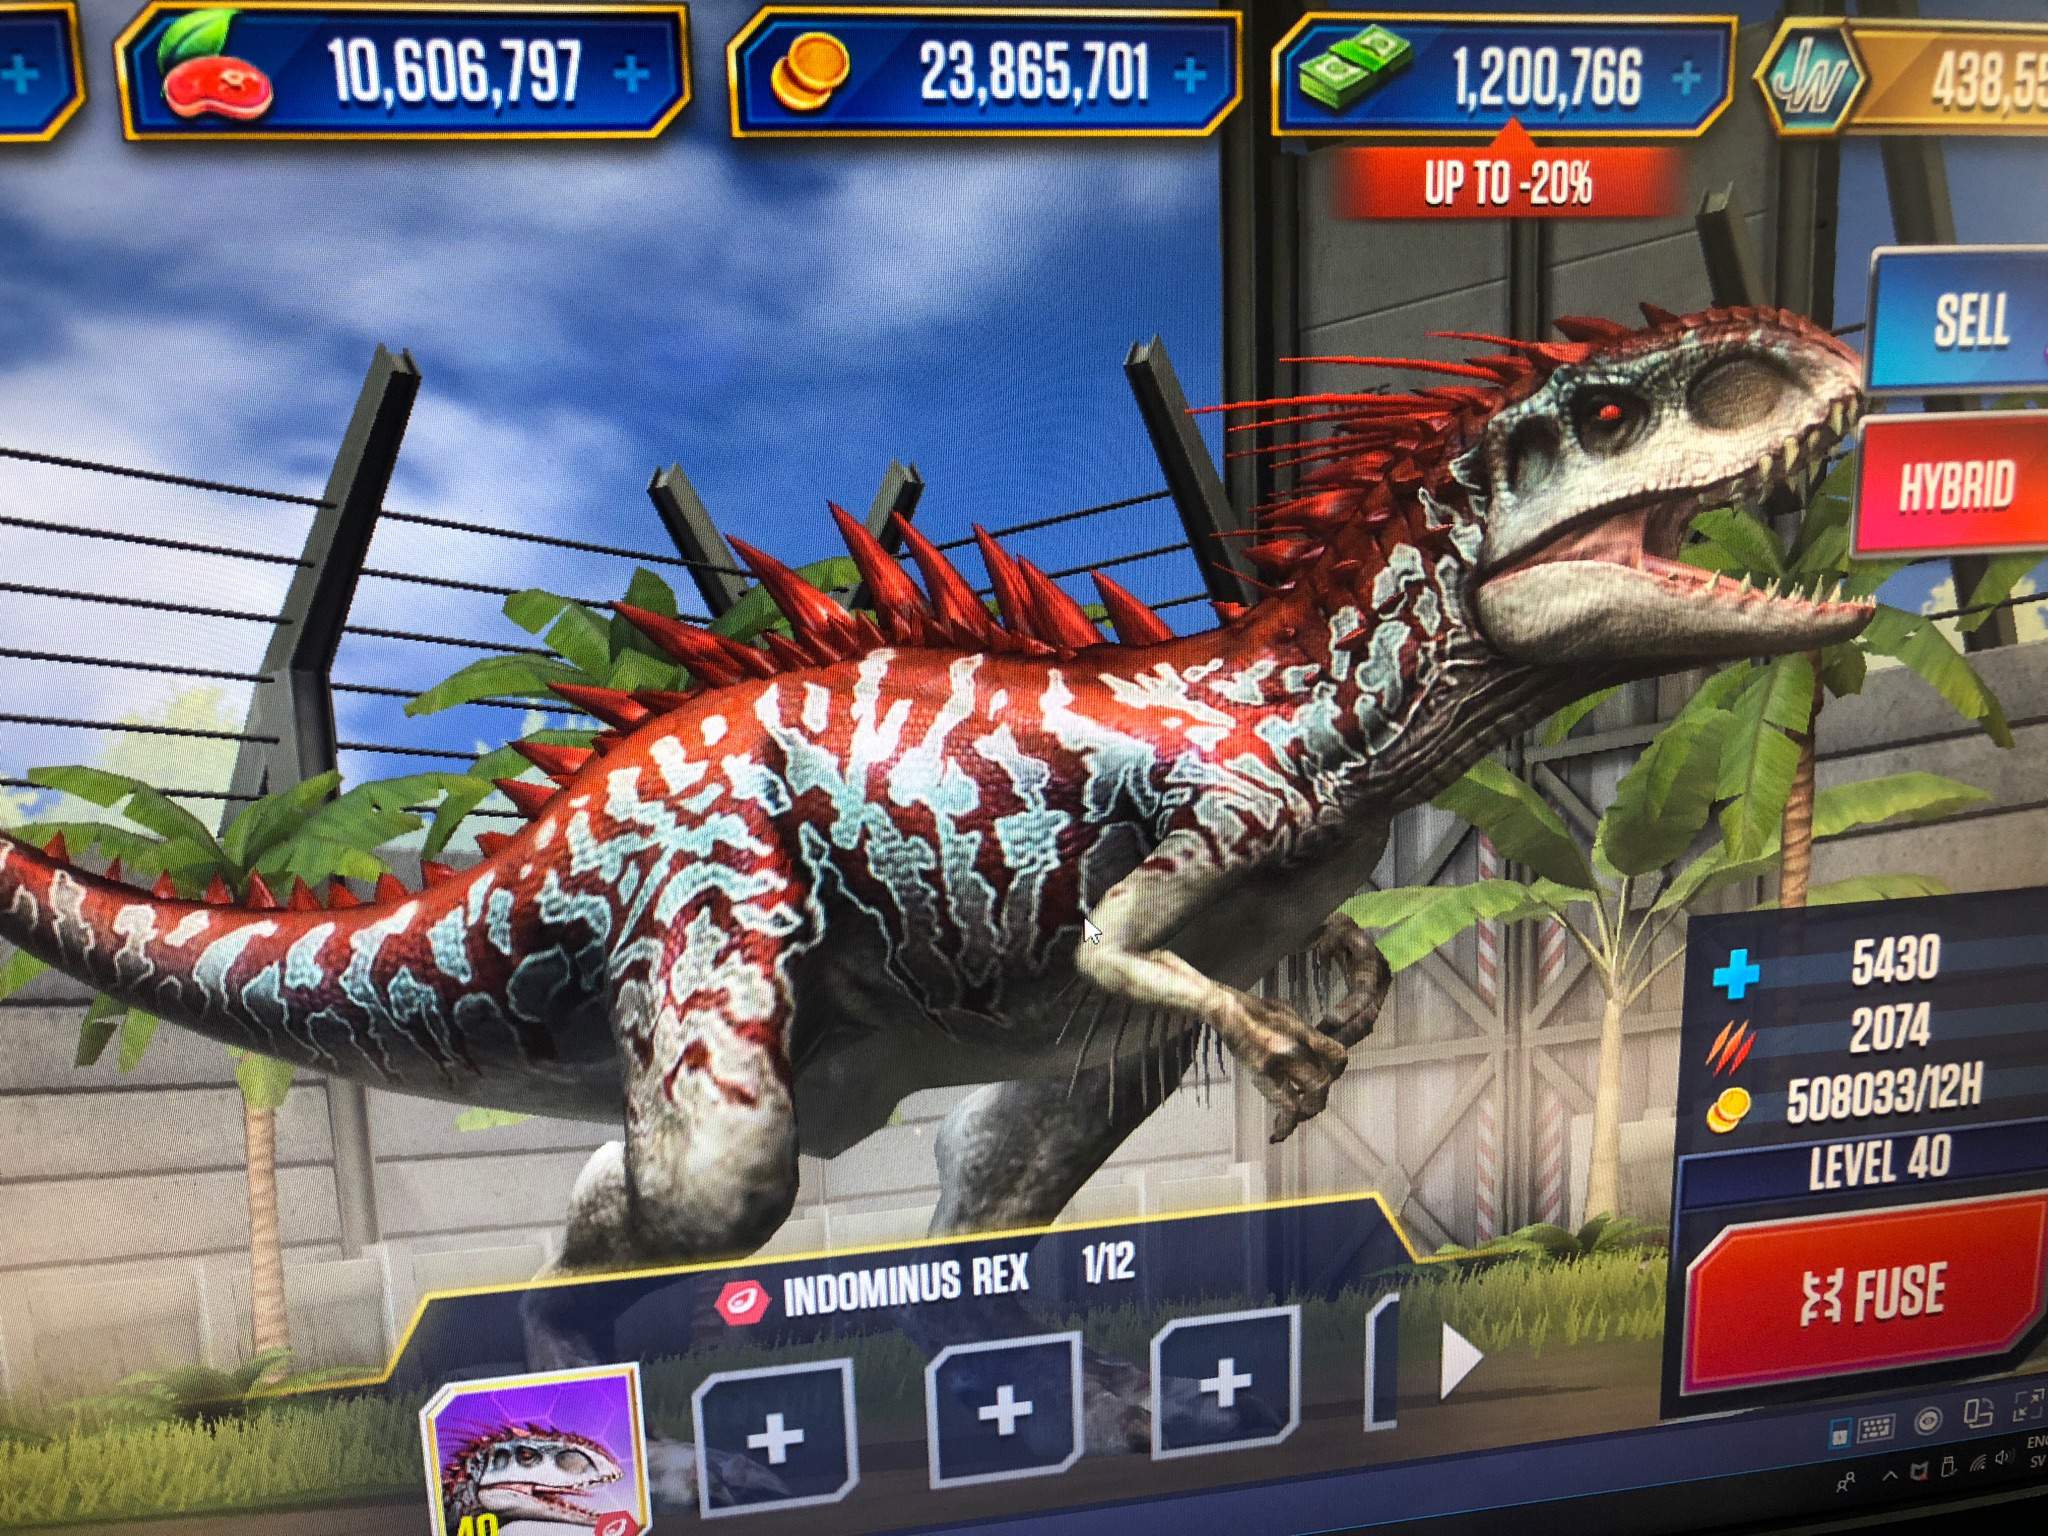 Level 40 Indominus Rex uwu | JurassicWorldTheGame Amino